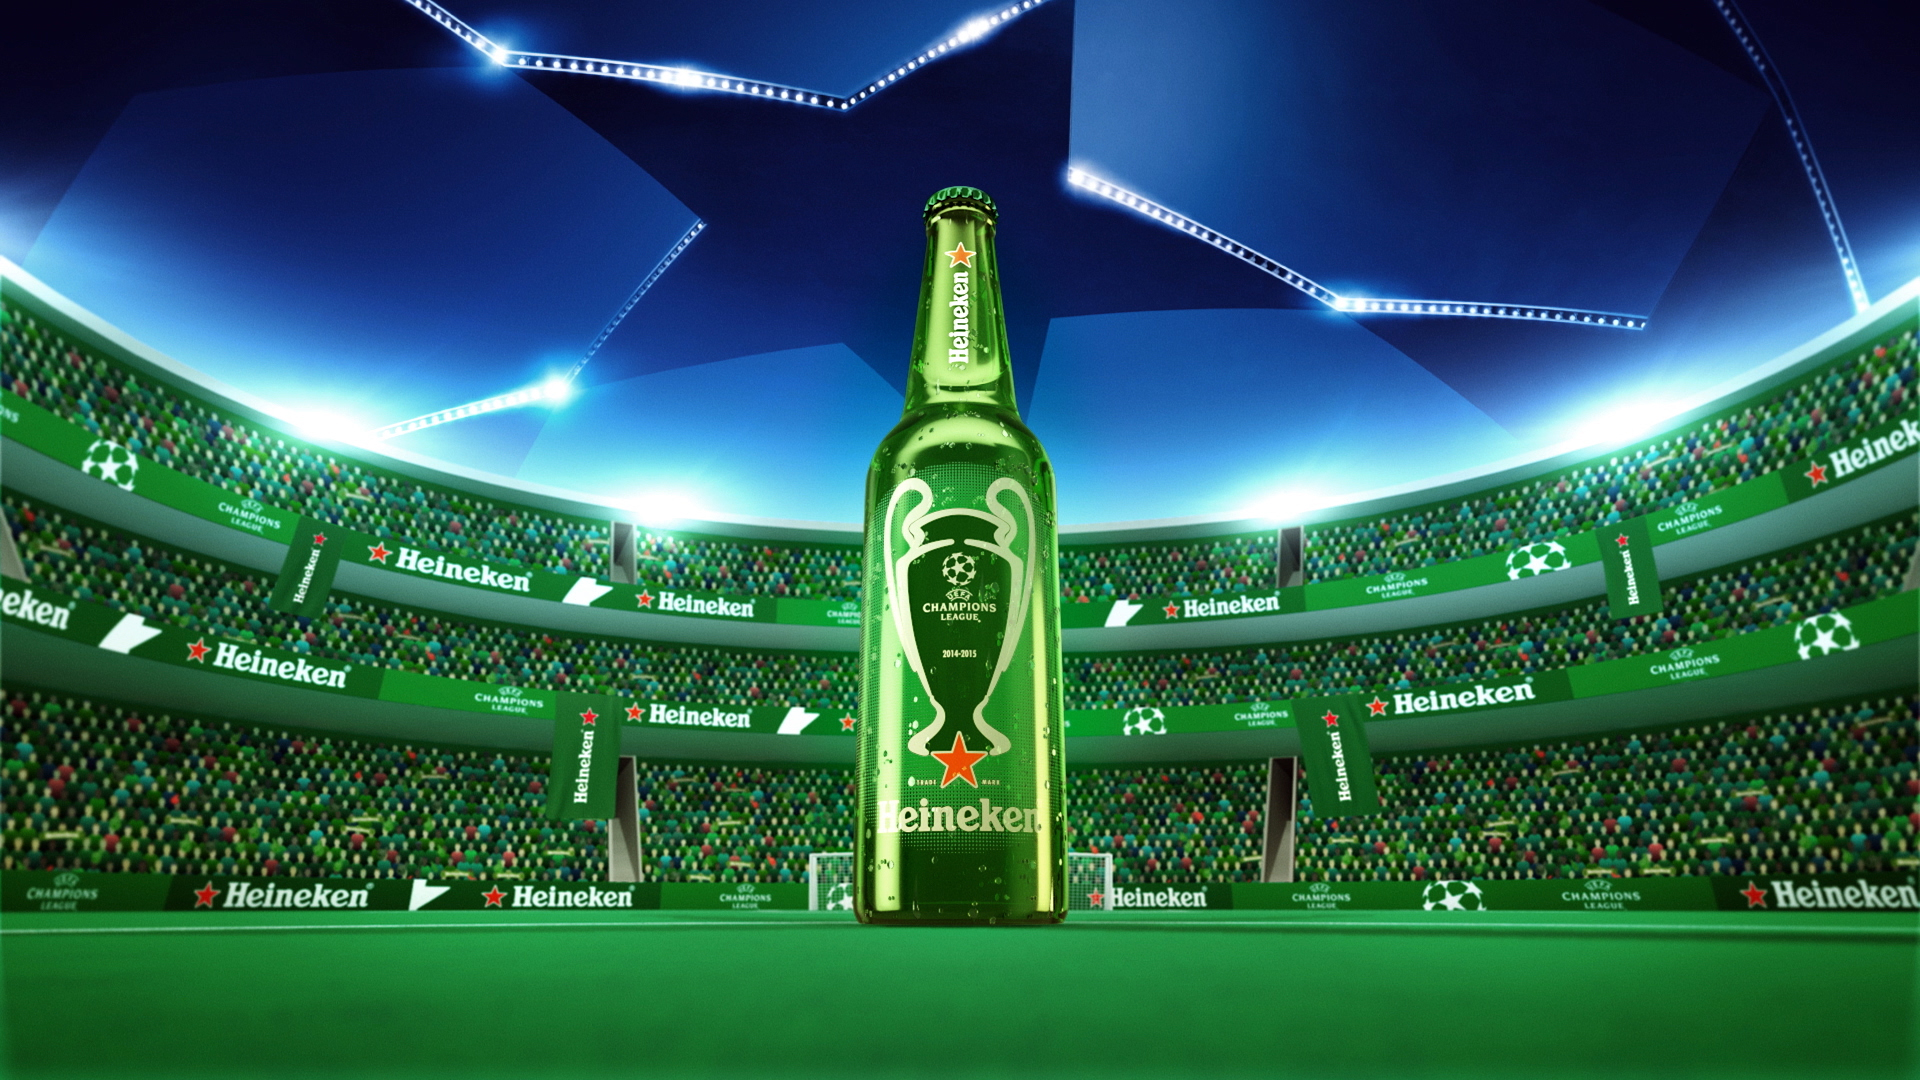 Heineken. The Grand Finale